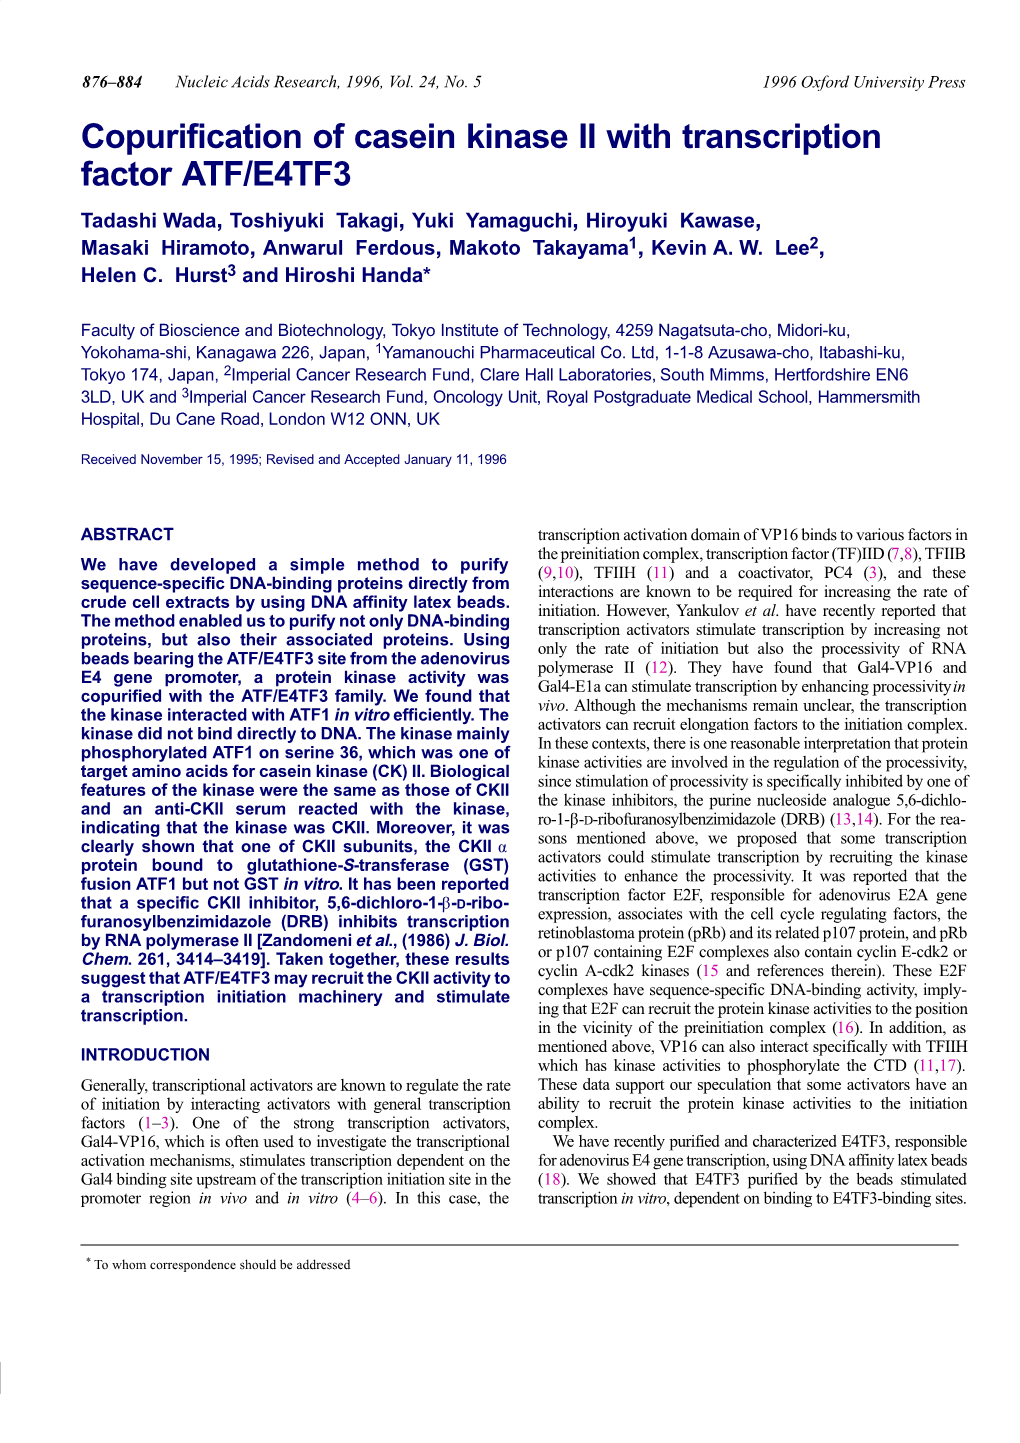 Copurification of Casein Kinase II with Transcription Factor ATF/E4TF3